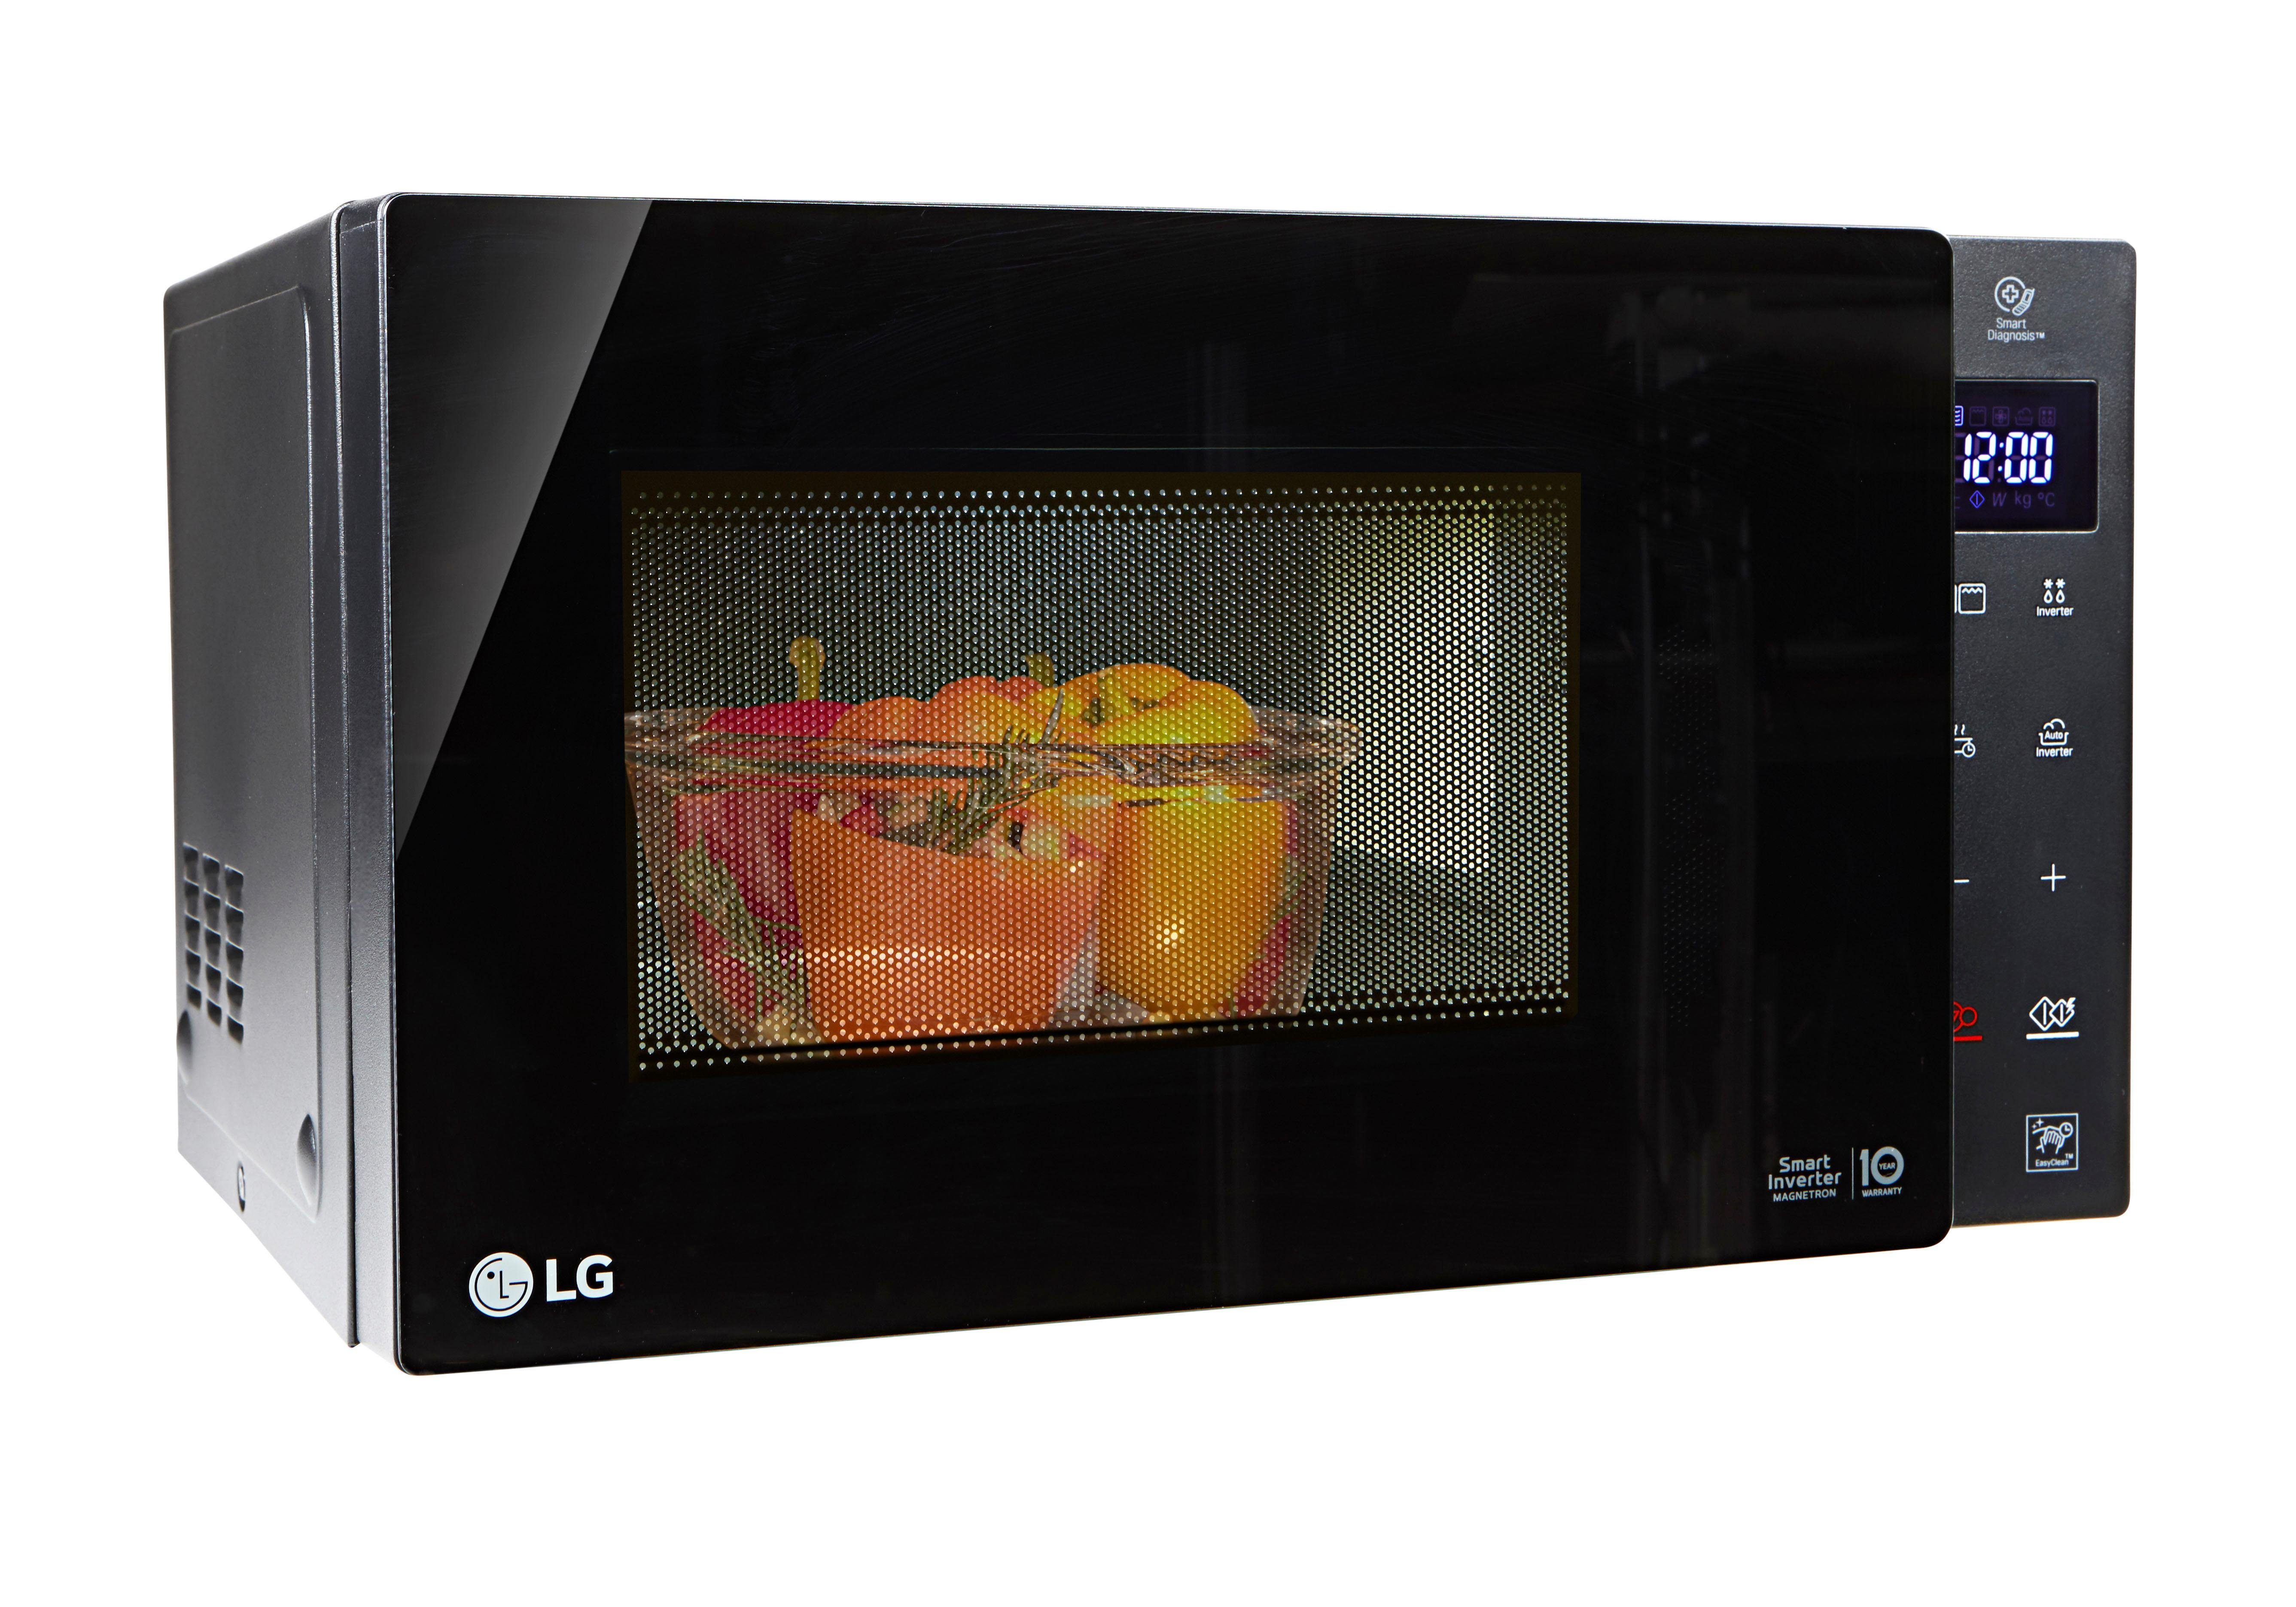 LG Mikrowelle MH 6535 GIS, Grill, 25 l, Smart Inverter Technologie, echte  Glasfront online kaufen | OTTO